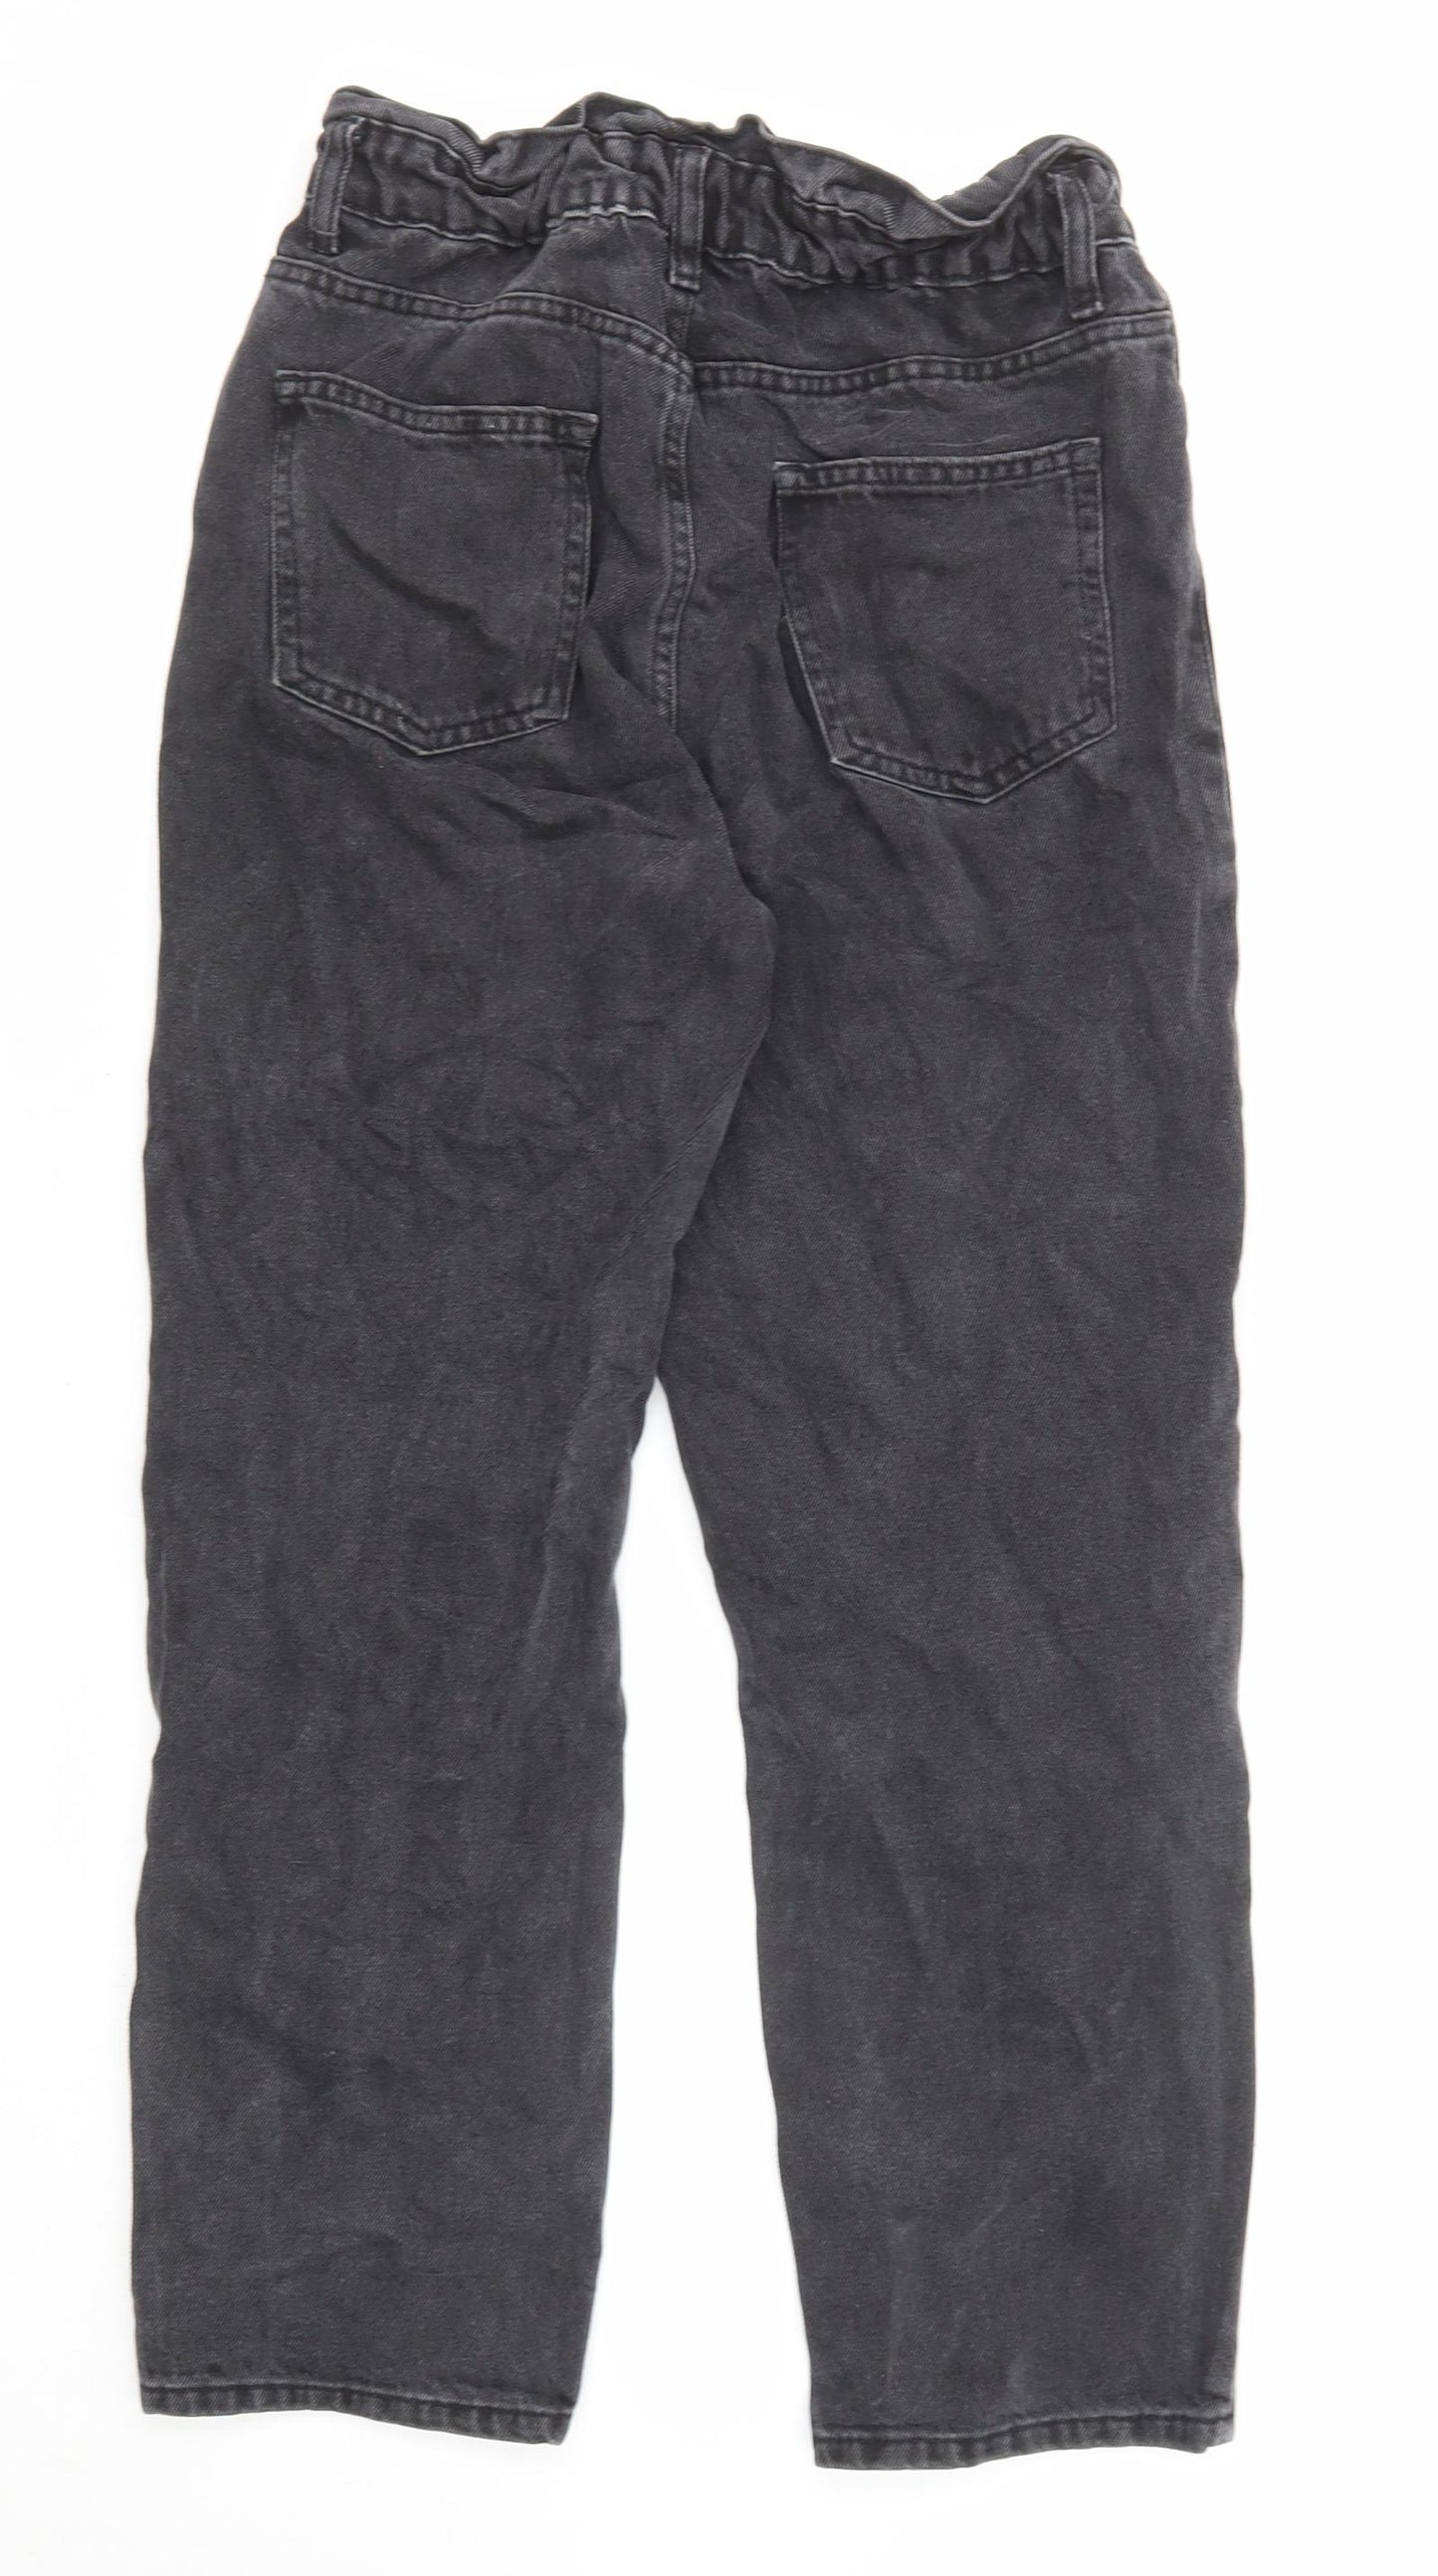 Denim & Co. Womens Black Cotton Straight Jeans Size 10 L24 in Regular Zip - Elastic Waist